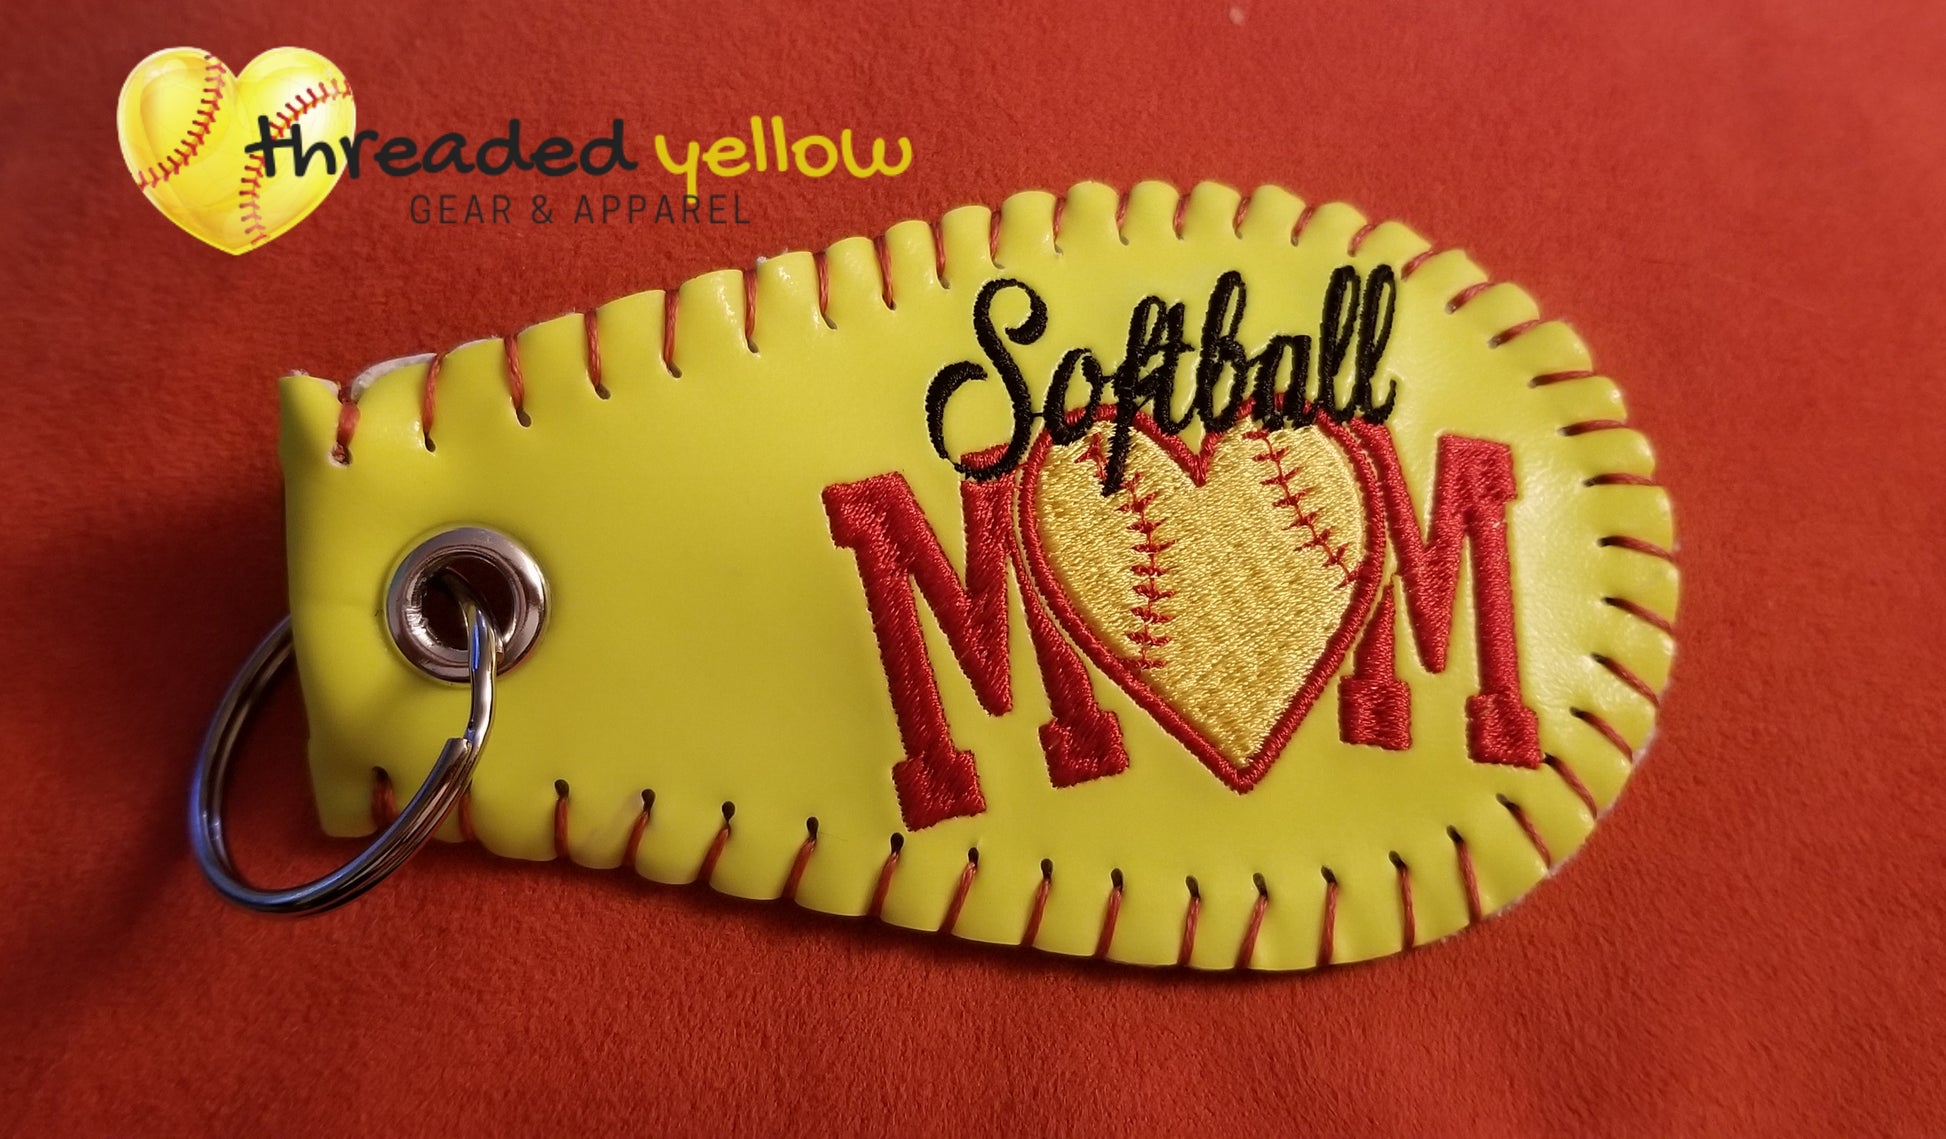 Softball Mom Keychain - Threaded Yellow Gear and Apparel